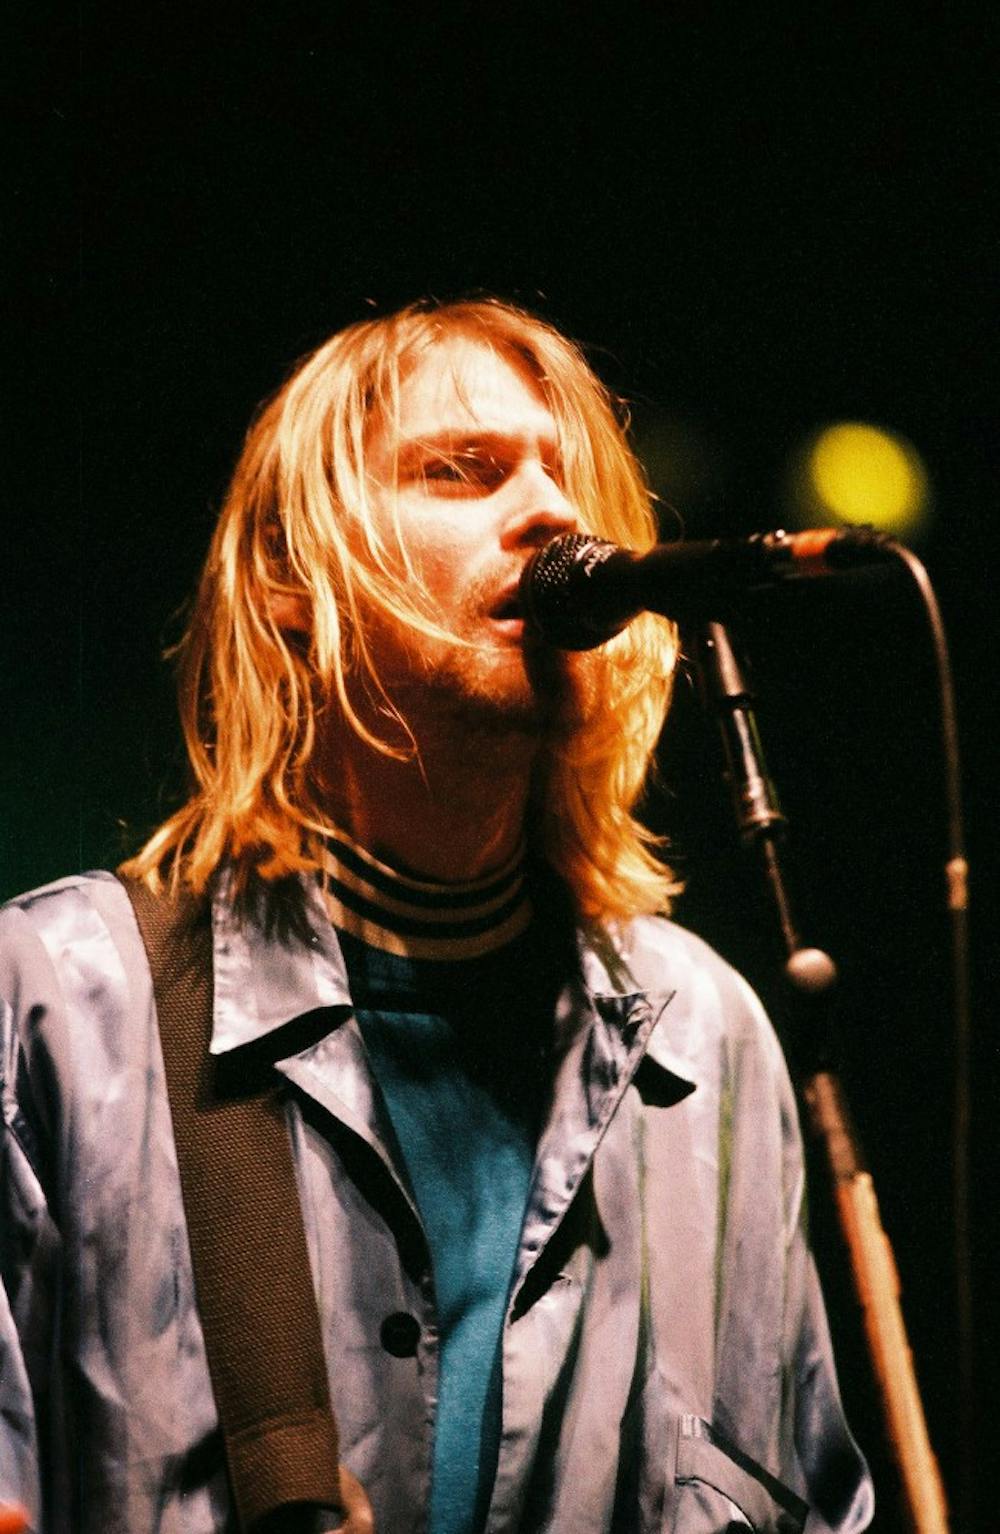 Singer and guitarist Kurt Cobain of Nirvana performs live in Amsterdam. (DAPR/Zuma Press/TNS)